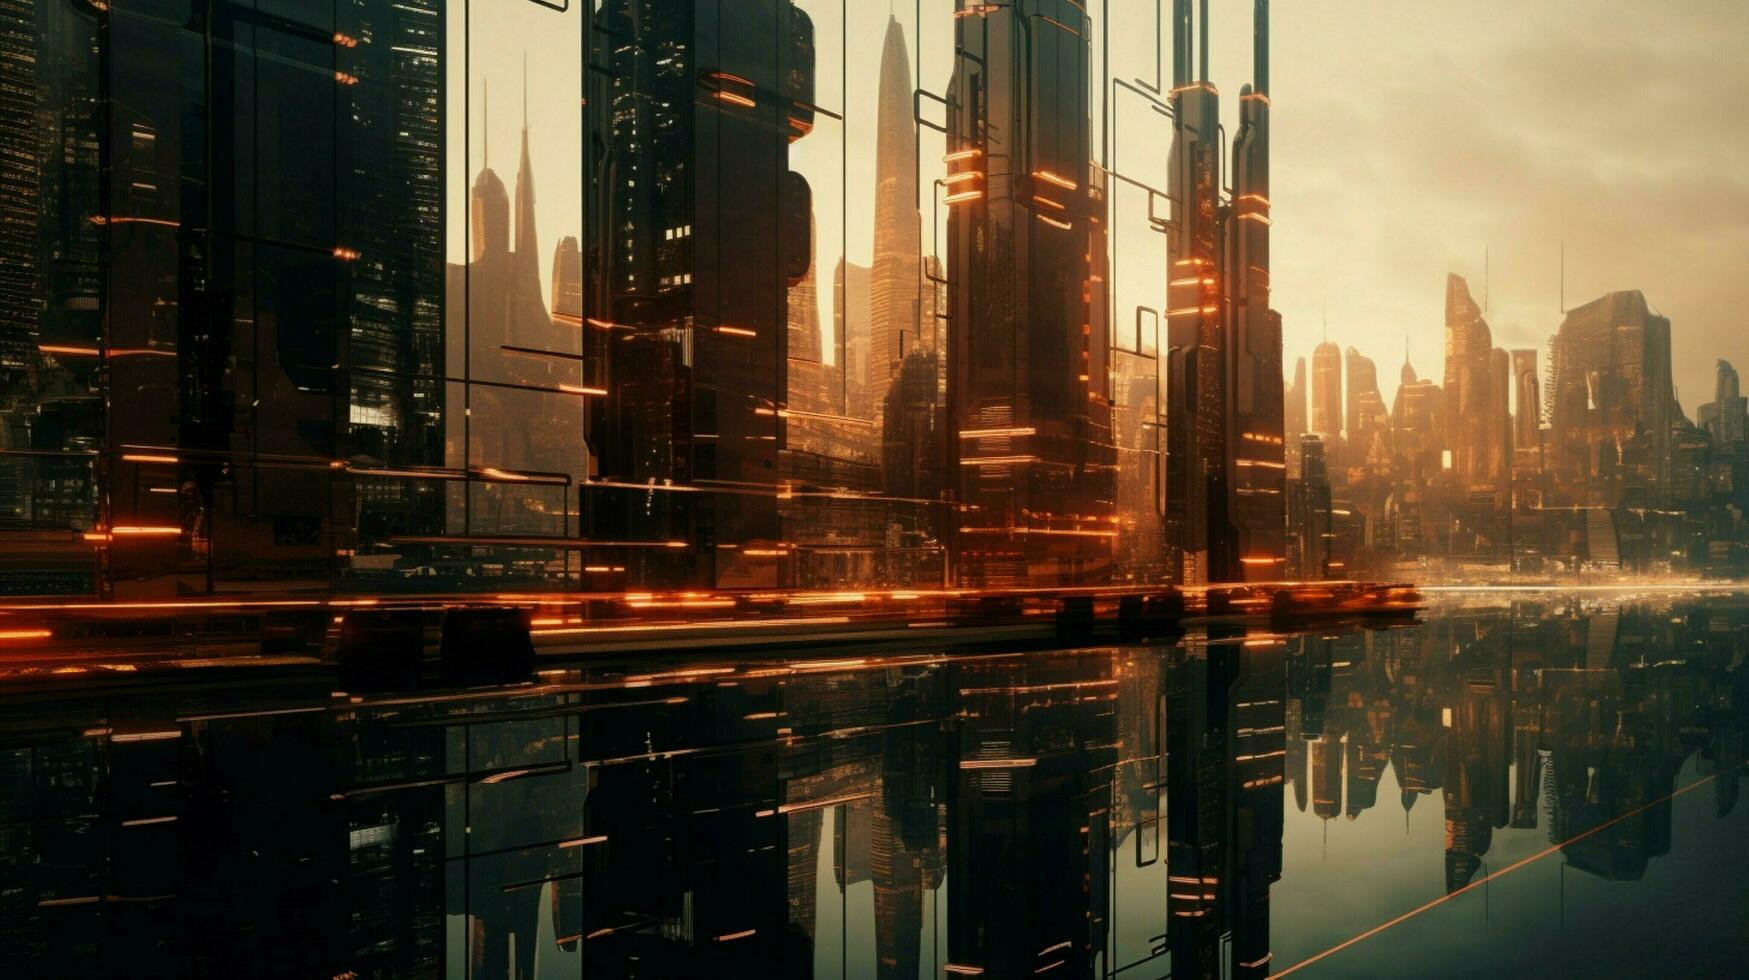 futuristic skyscraper reflects city life at dusk photo